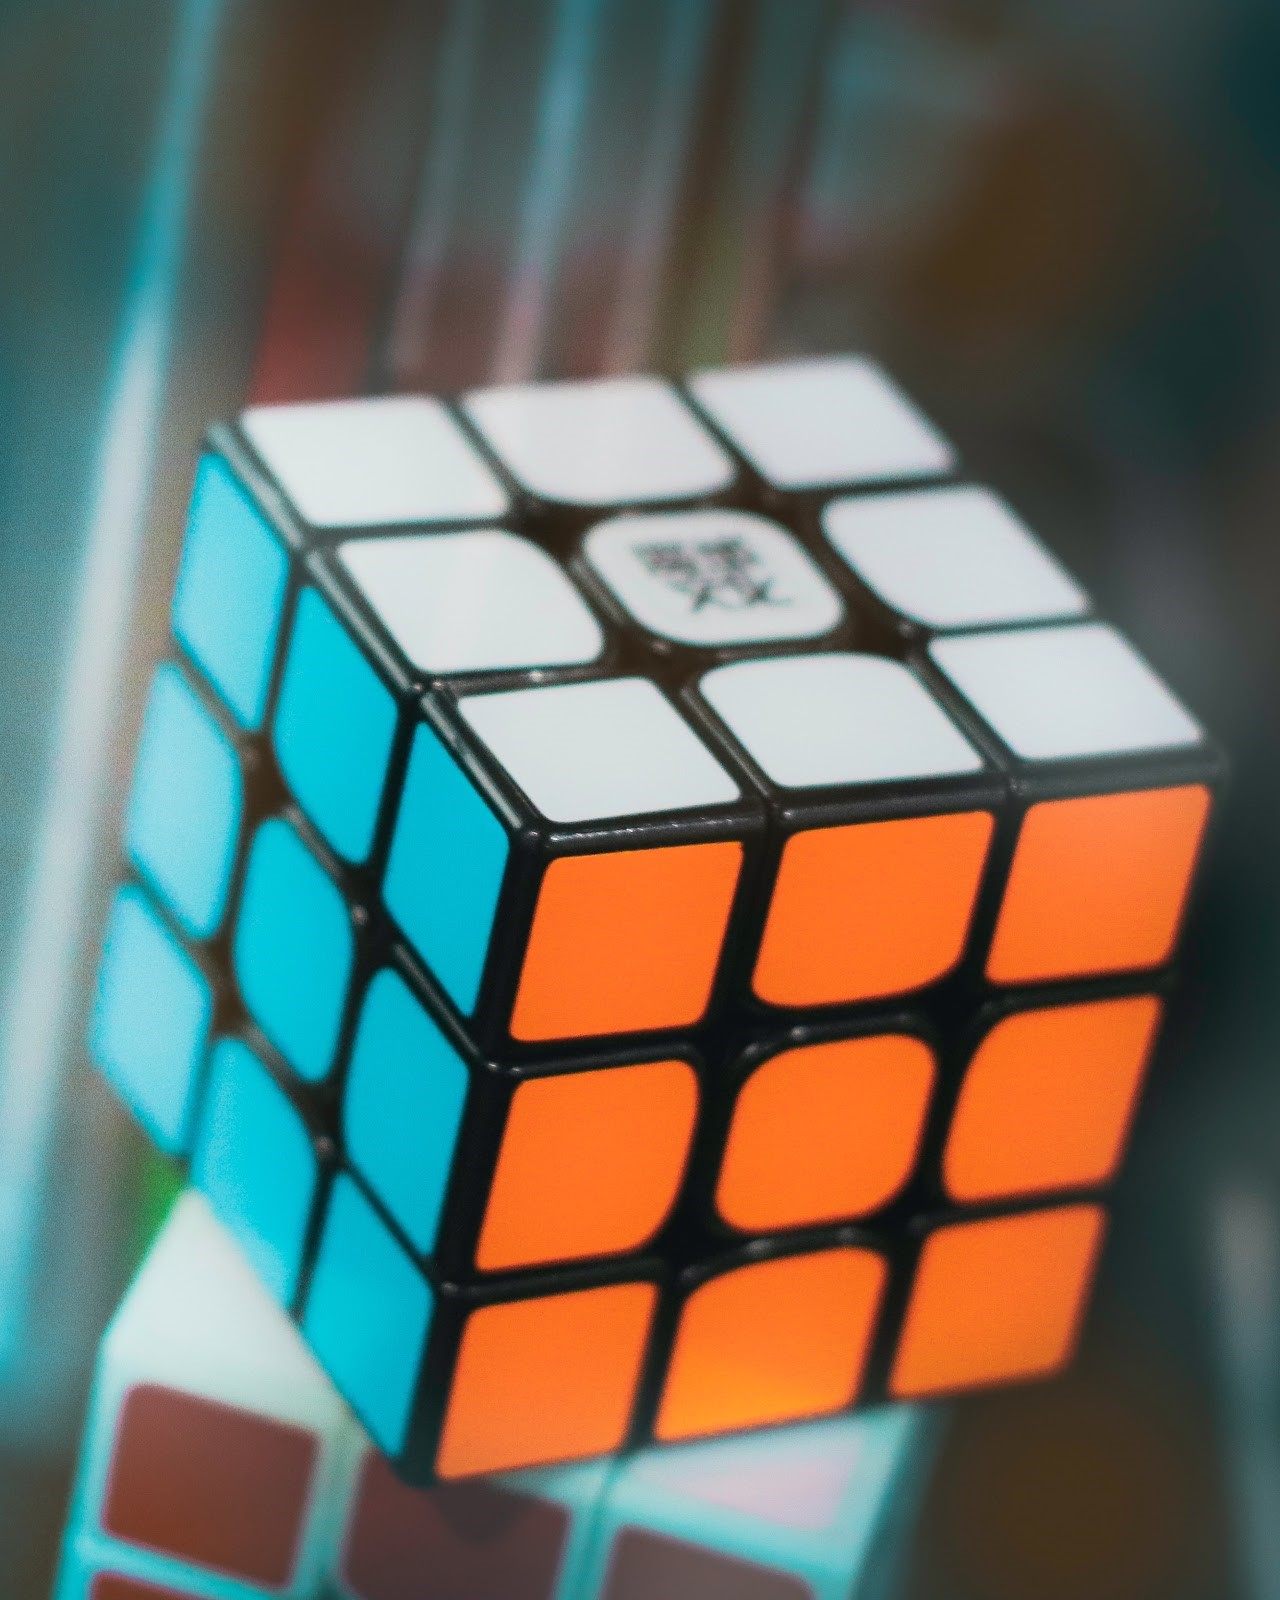 mental benefits of solving rubiks cube